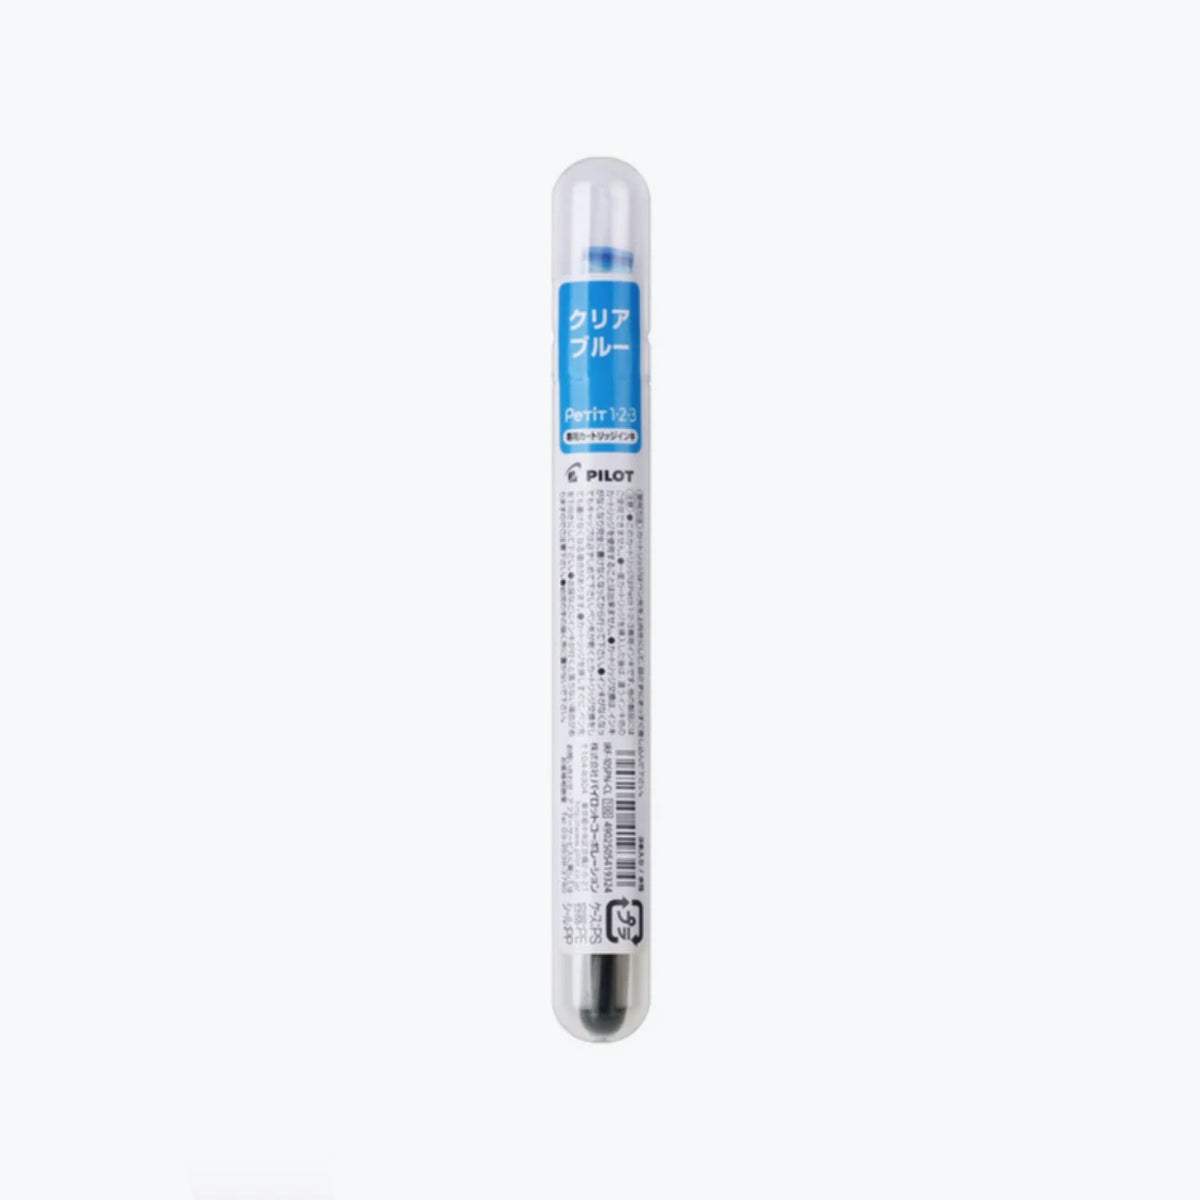 Pilot - Fountain Pen Refill - Petit - Clear Blue <Outgoing>